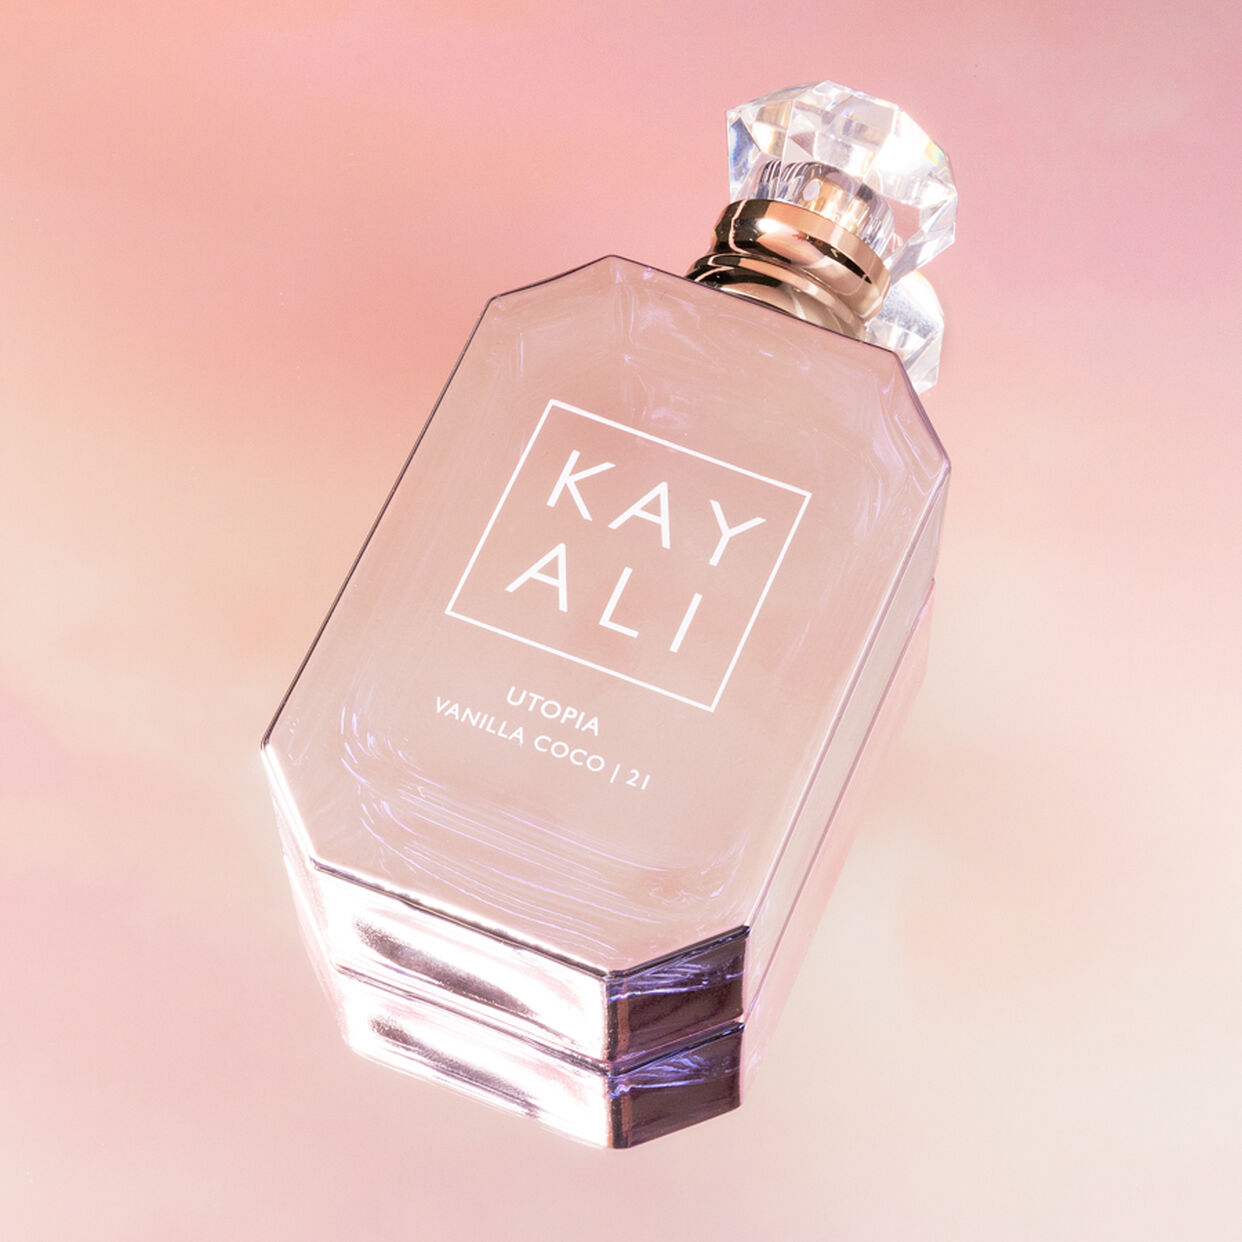 Kayali Utopia Vanilla Coco |21 Eau De Parfum Intense